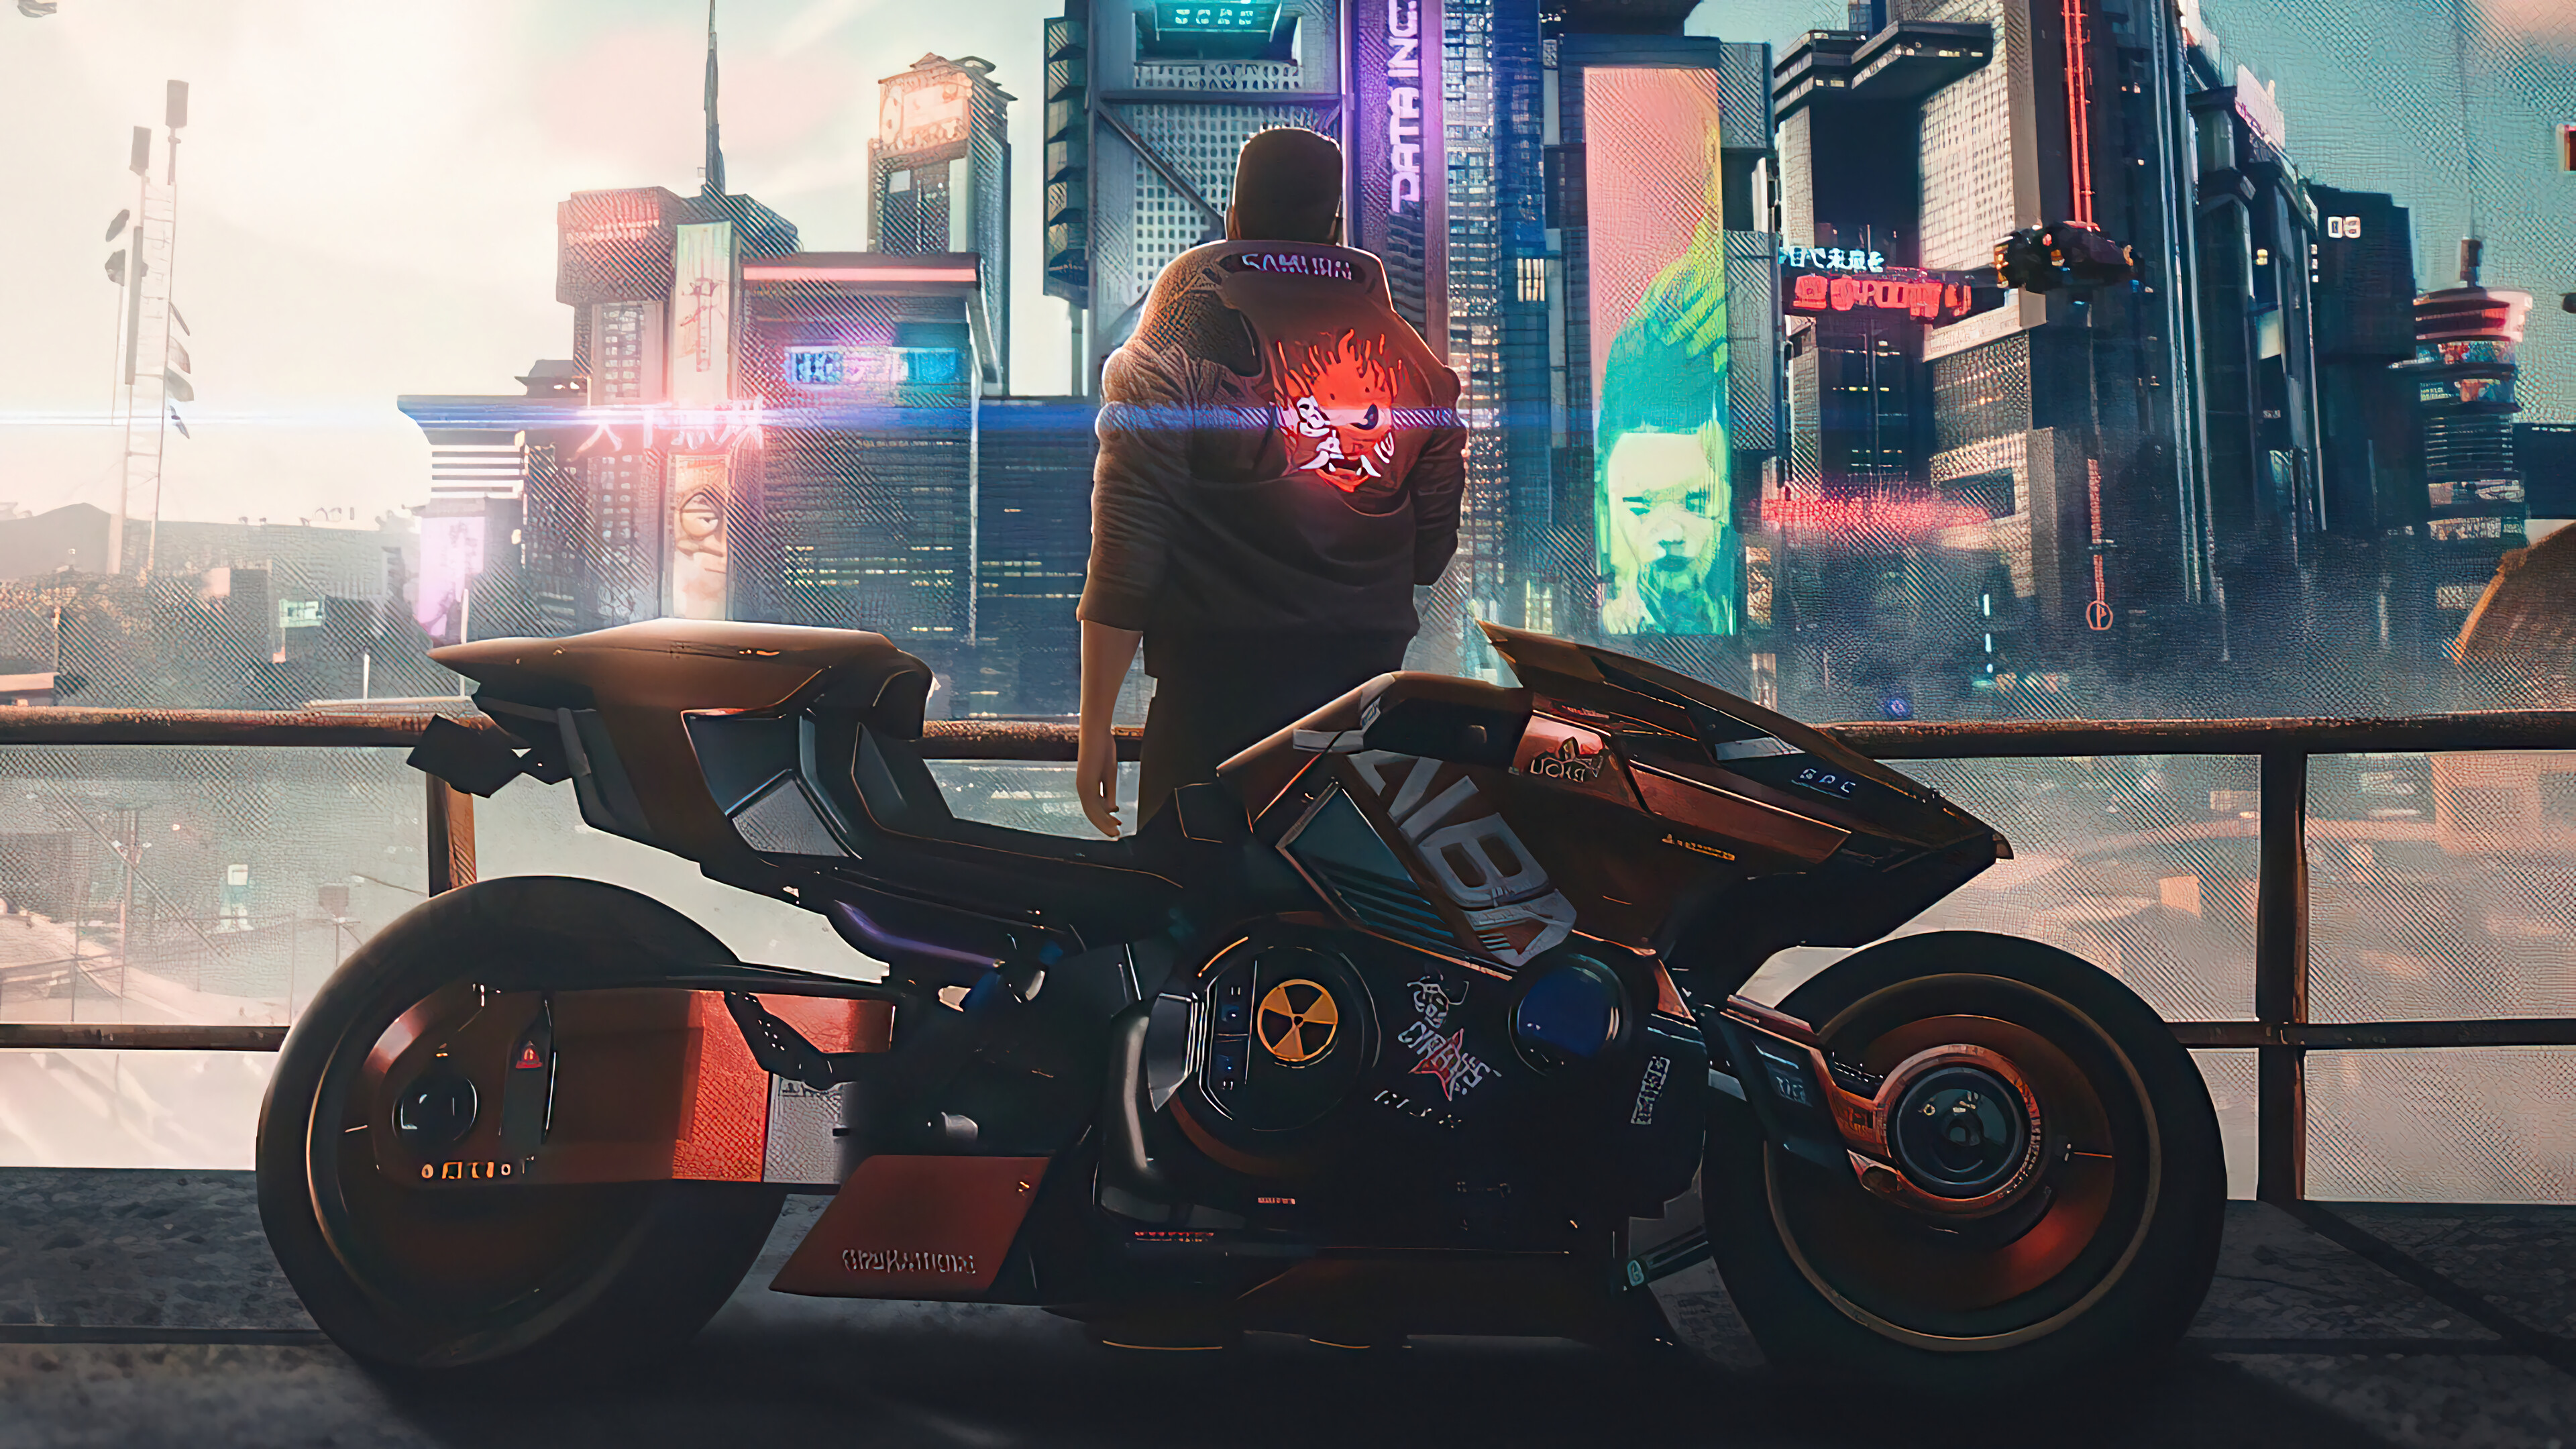 General 3840x2160 biker motorcycle vehicle video games city Cyberpunk 2077 building video game art futuristic